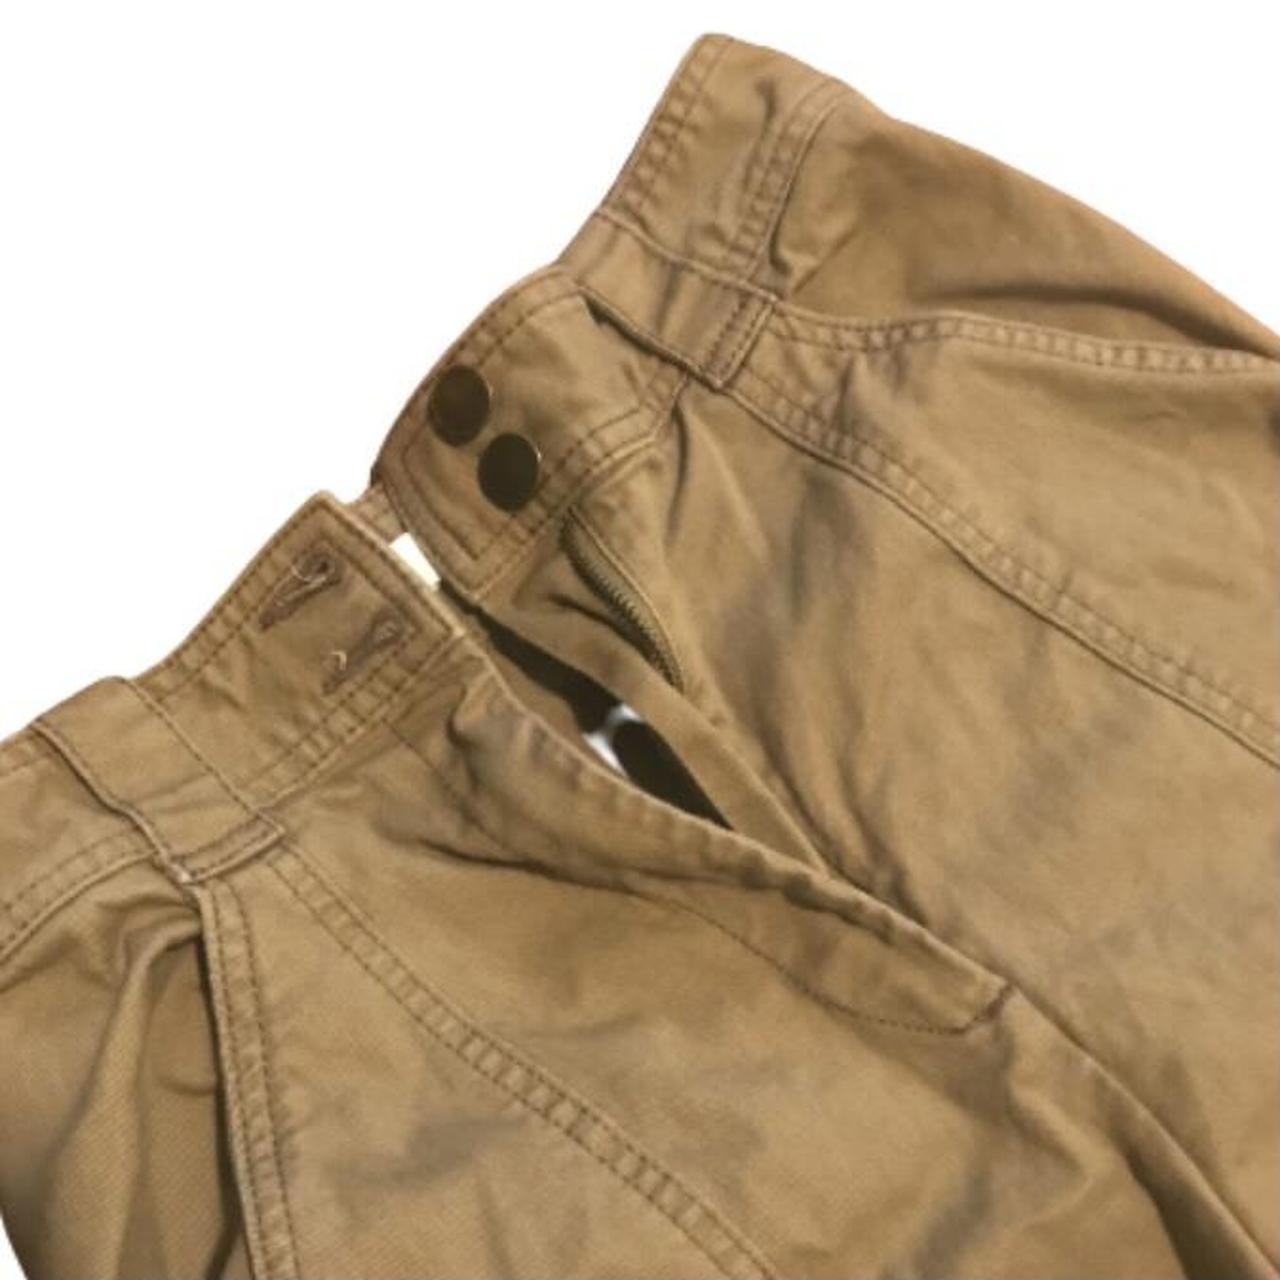 h&m high rise tan cargo pants, fits small-medium